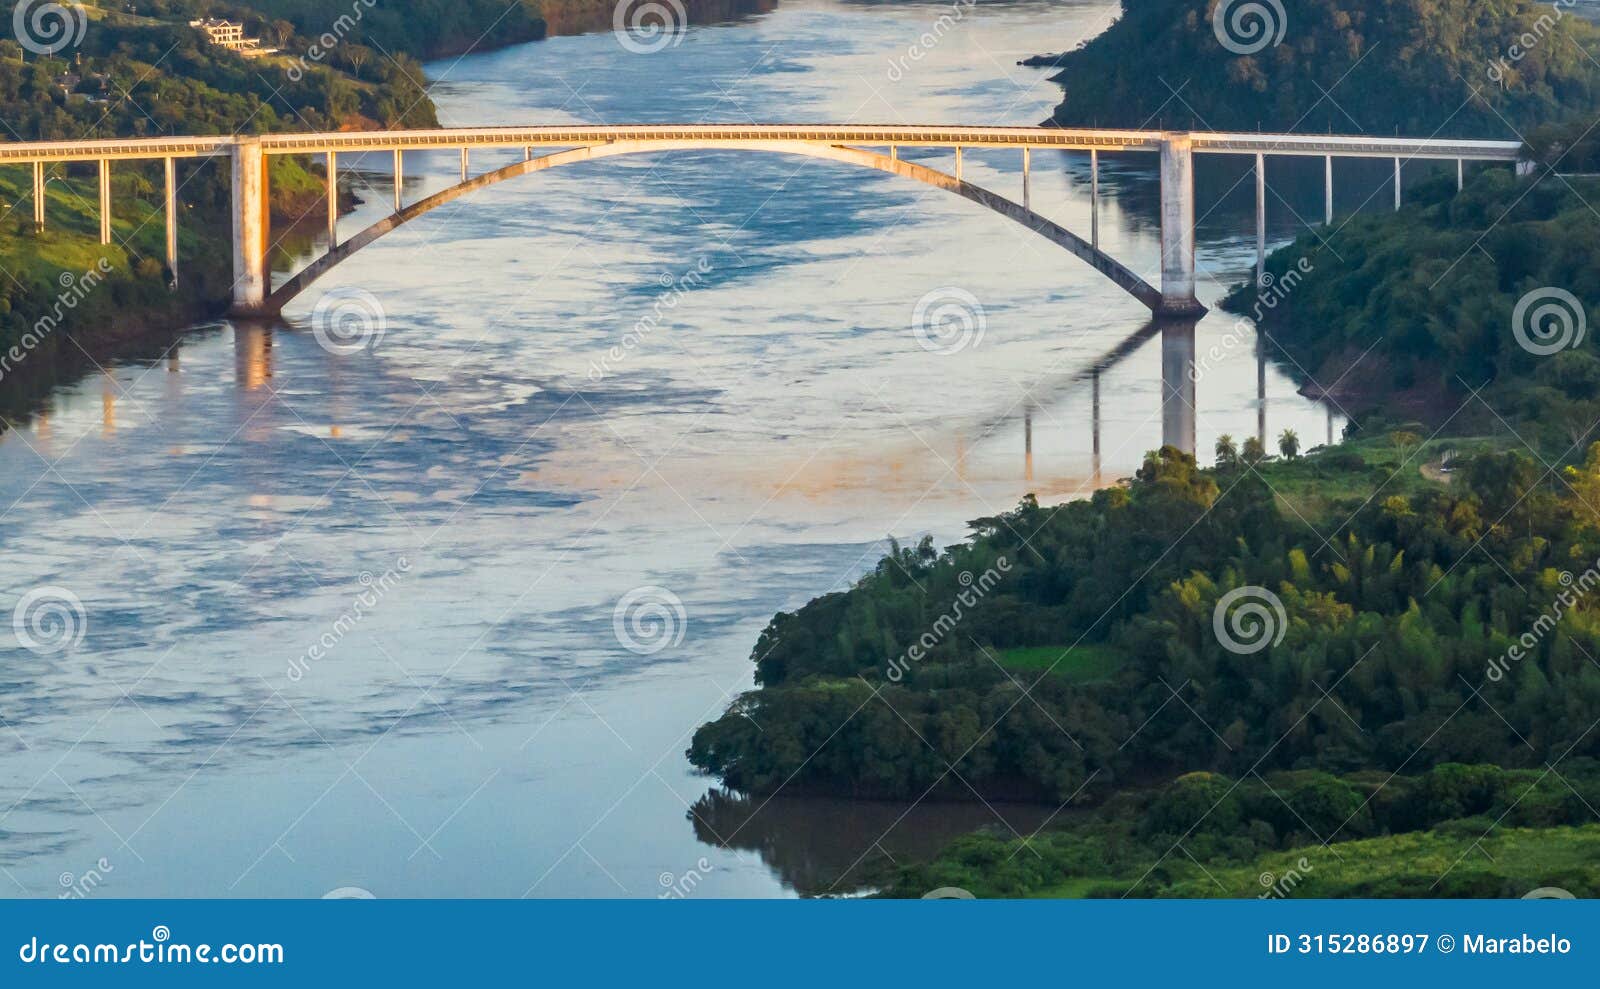 border between brazil and paraguay and connects foz do iguacu to ciudad del este. ponte da amizade in foz